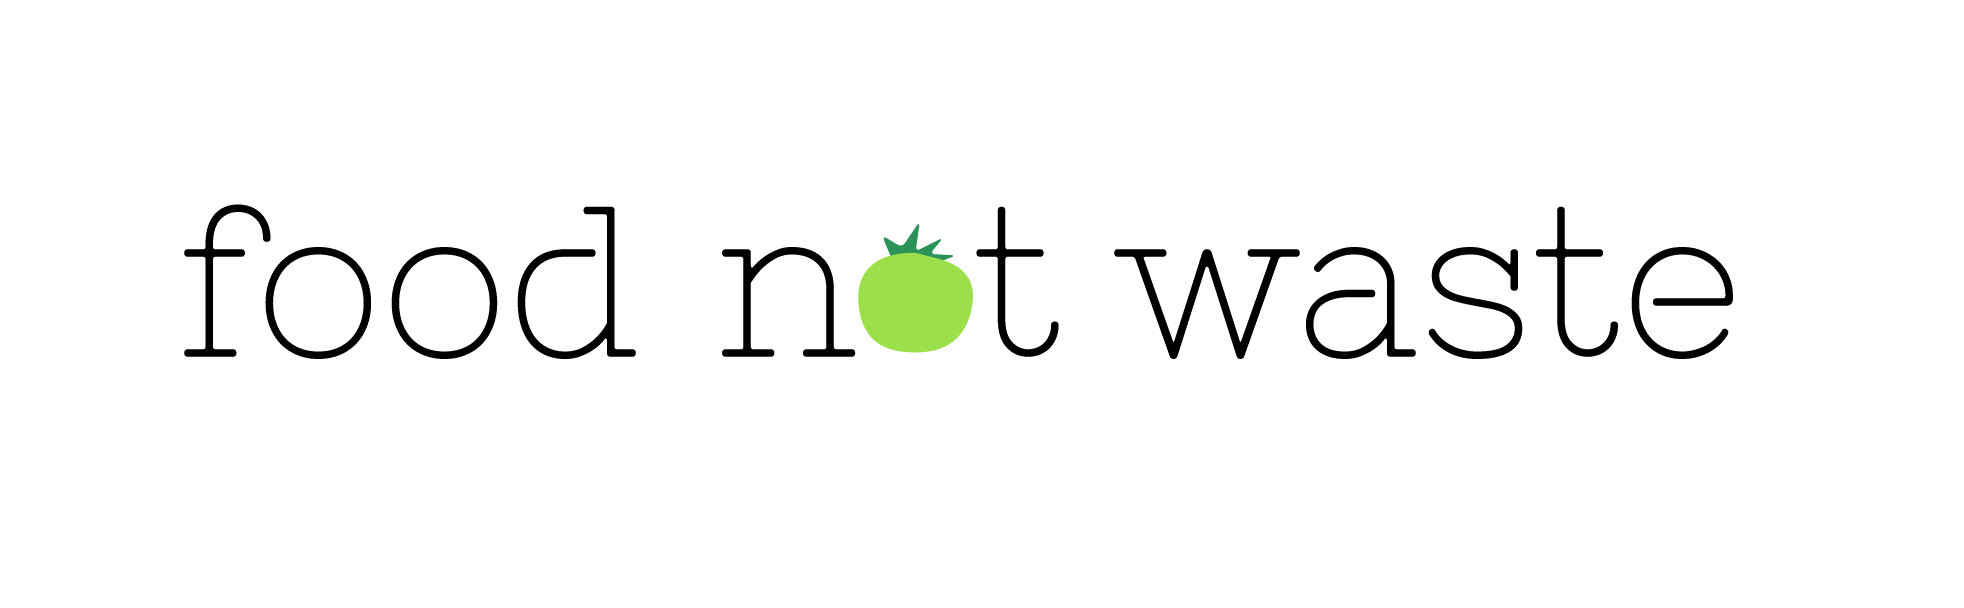 Food not Waste logo.